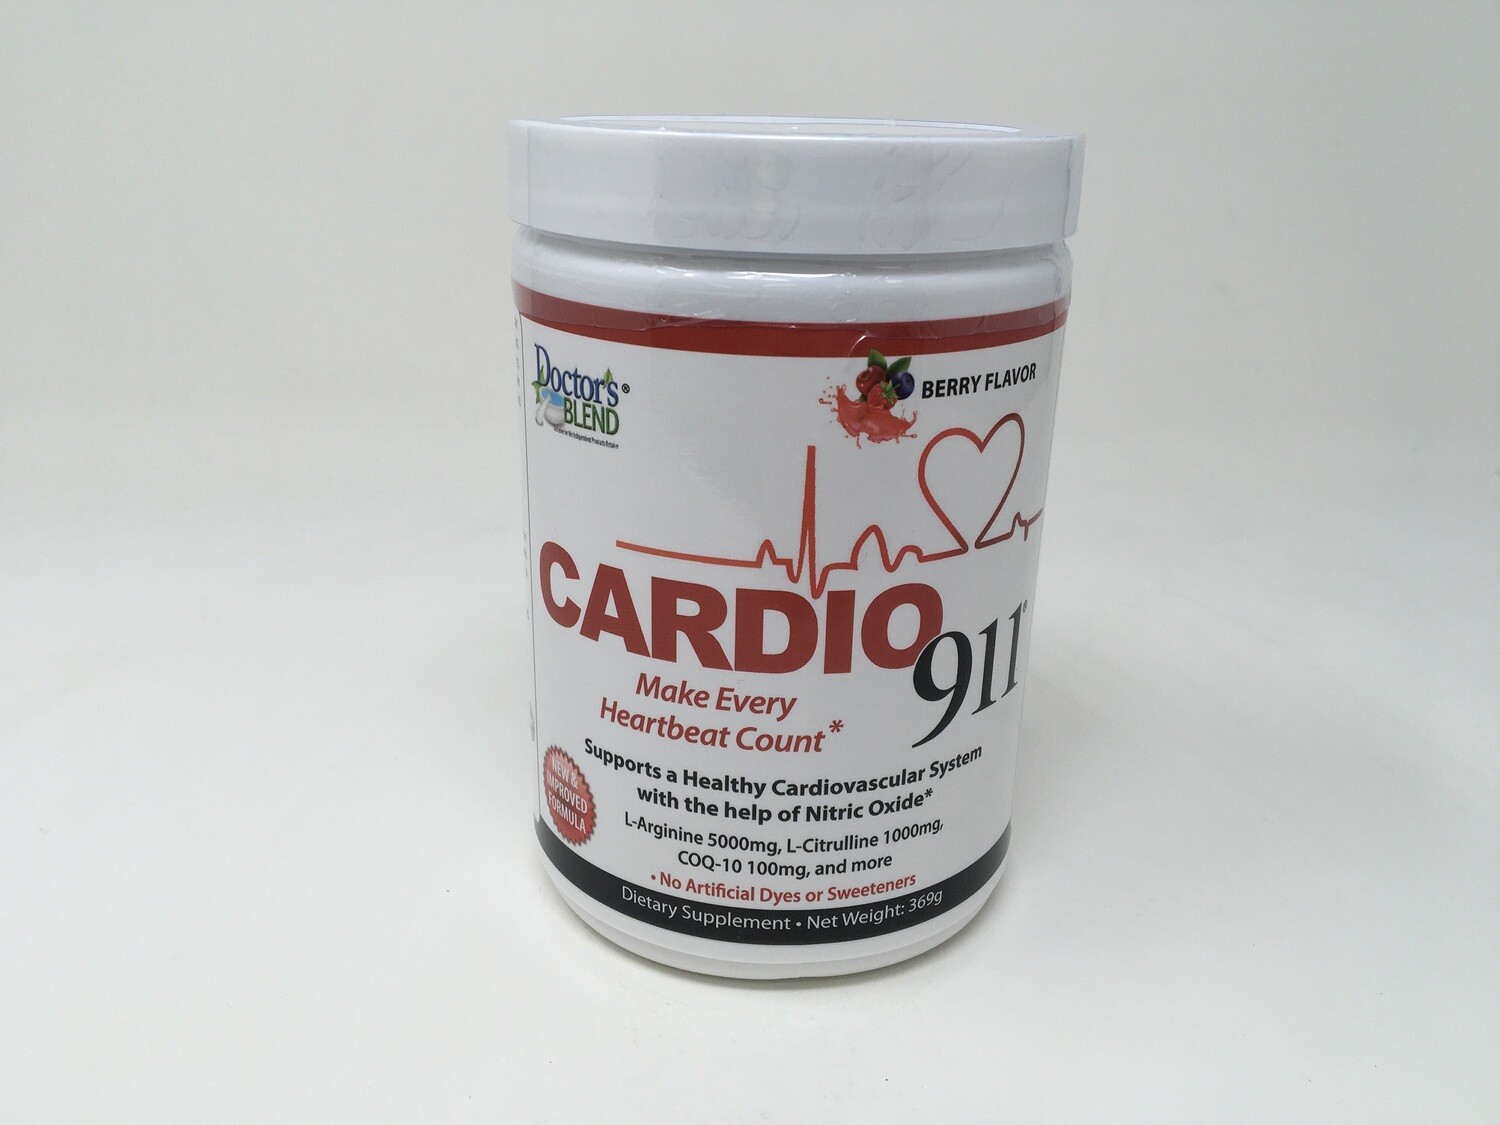 Cardio 911 Berry 30 servings (Doctors Blend)